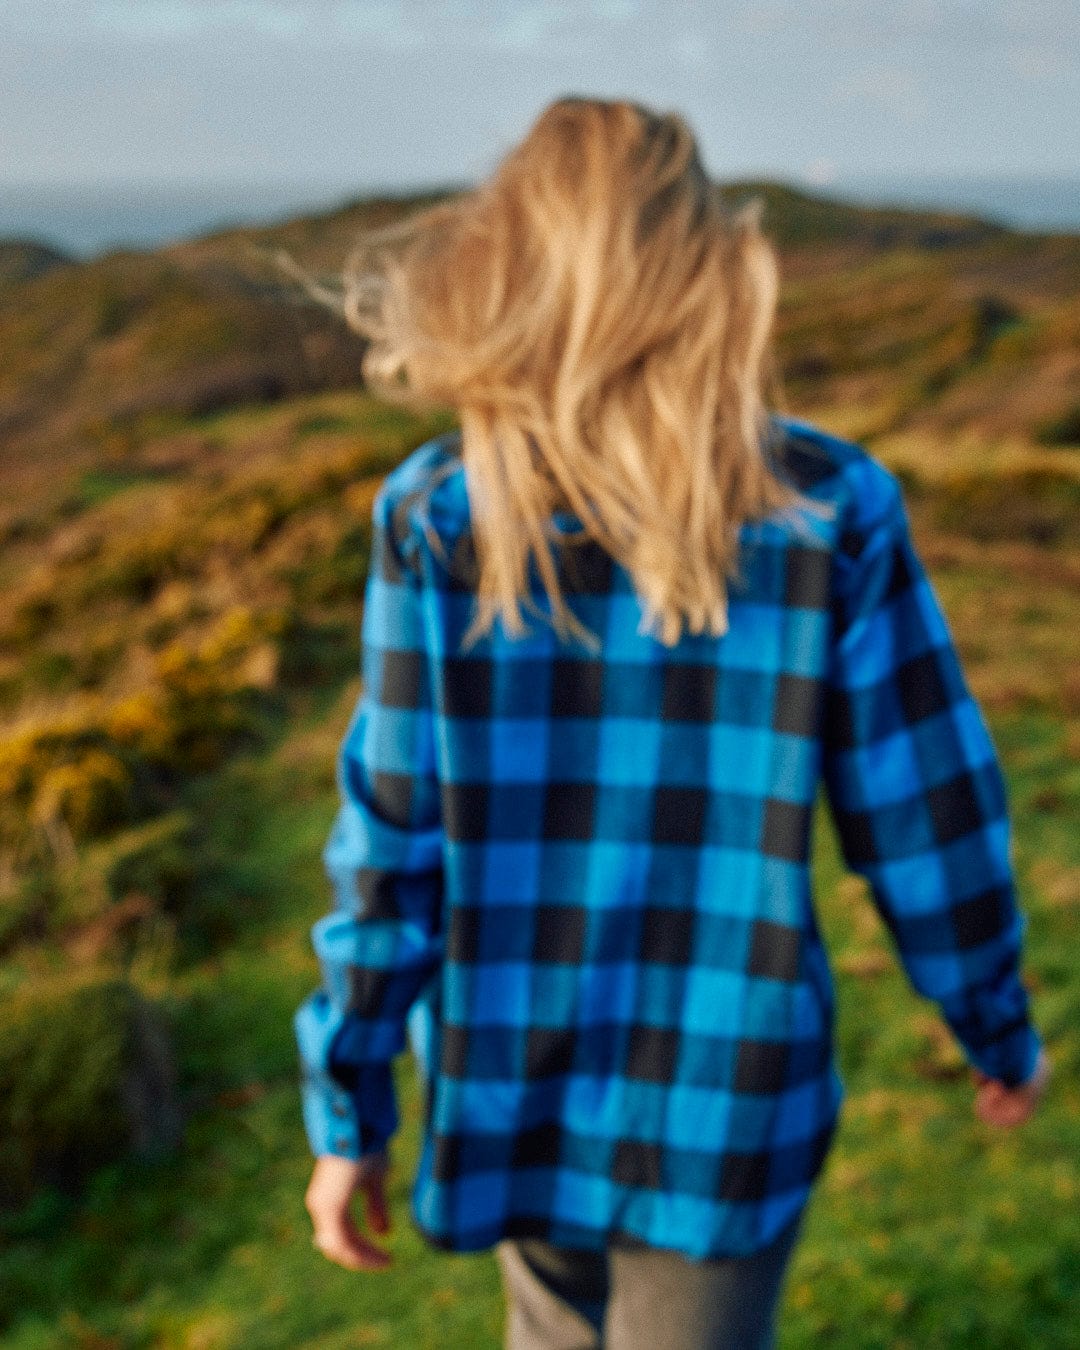 Saltrock's Rosalin - Womens Check Shirt - Blue/Black, a woman wearing a blue and black check pattern plaid shirt, walking on a grassy hill.